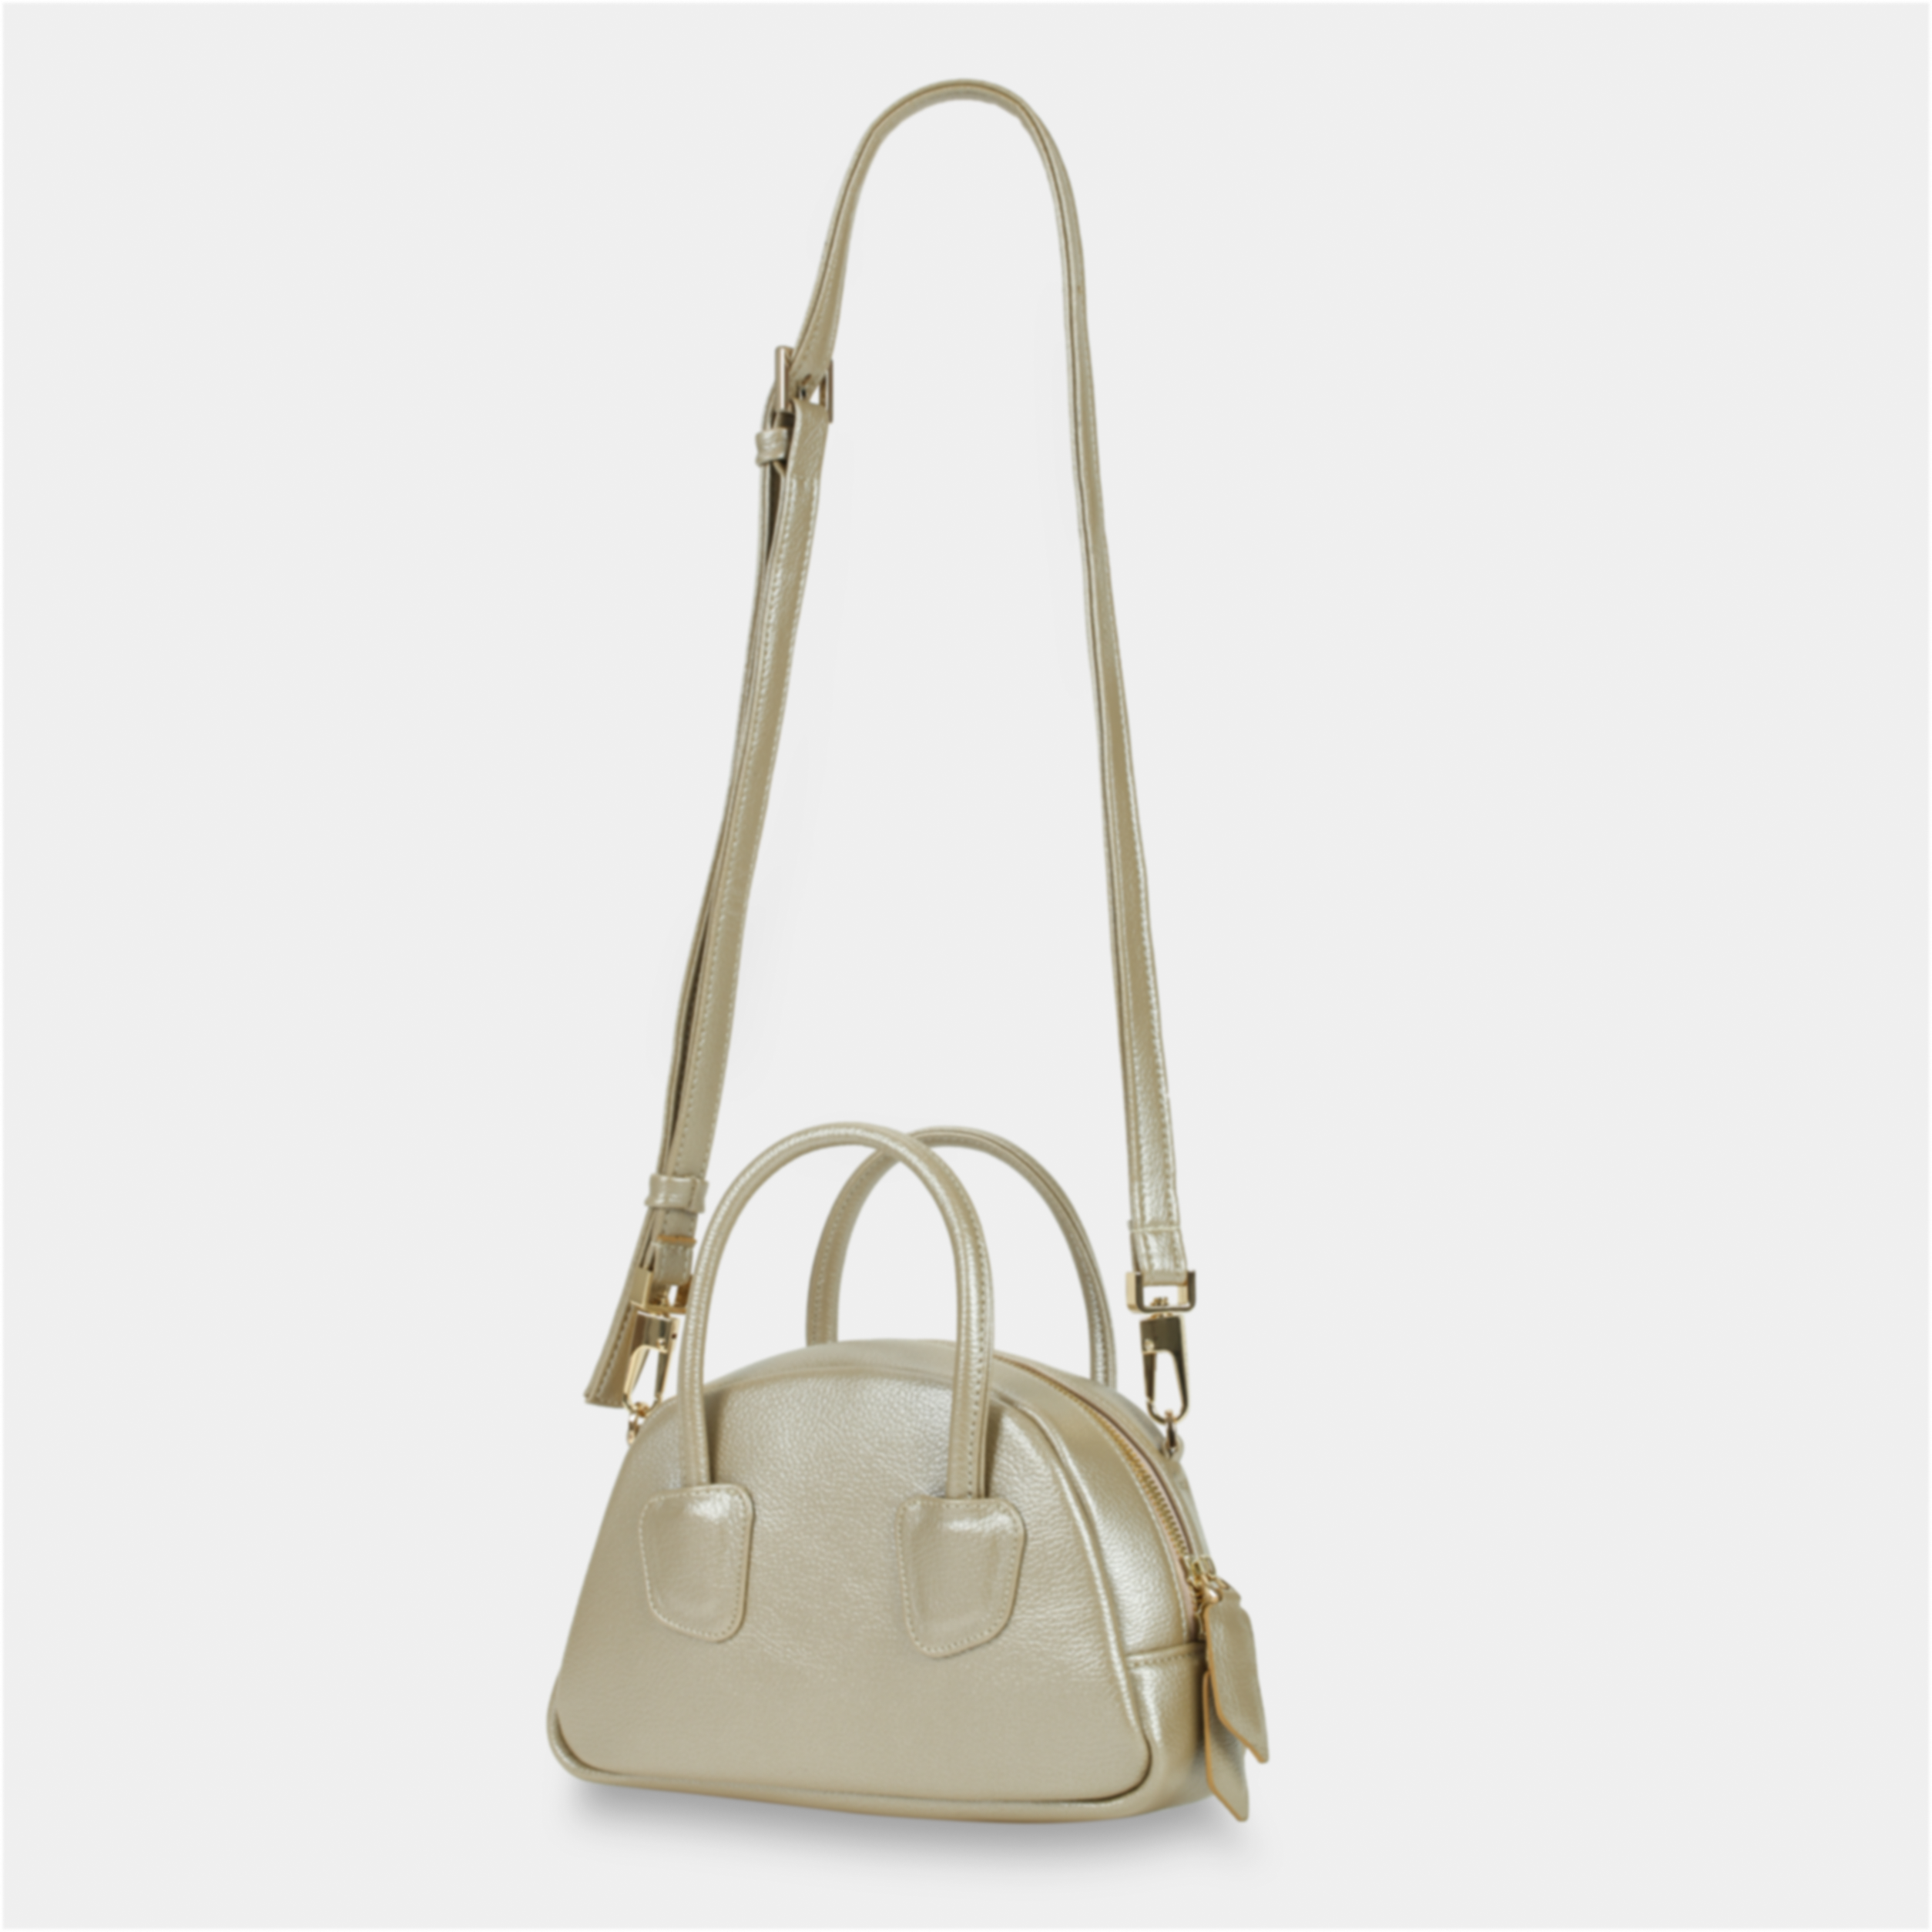 TACOS Handbag in Metallic Nude color large size (M)